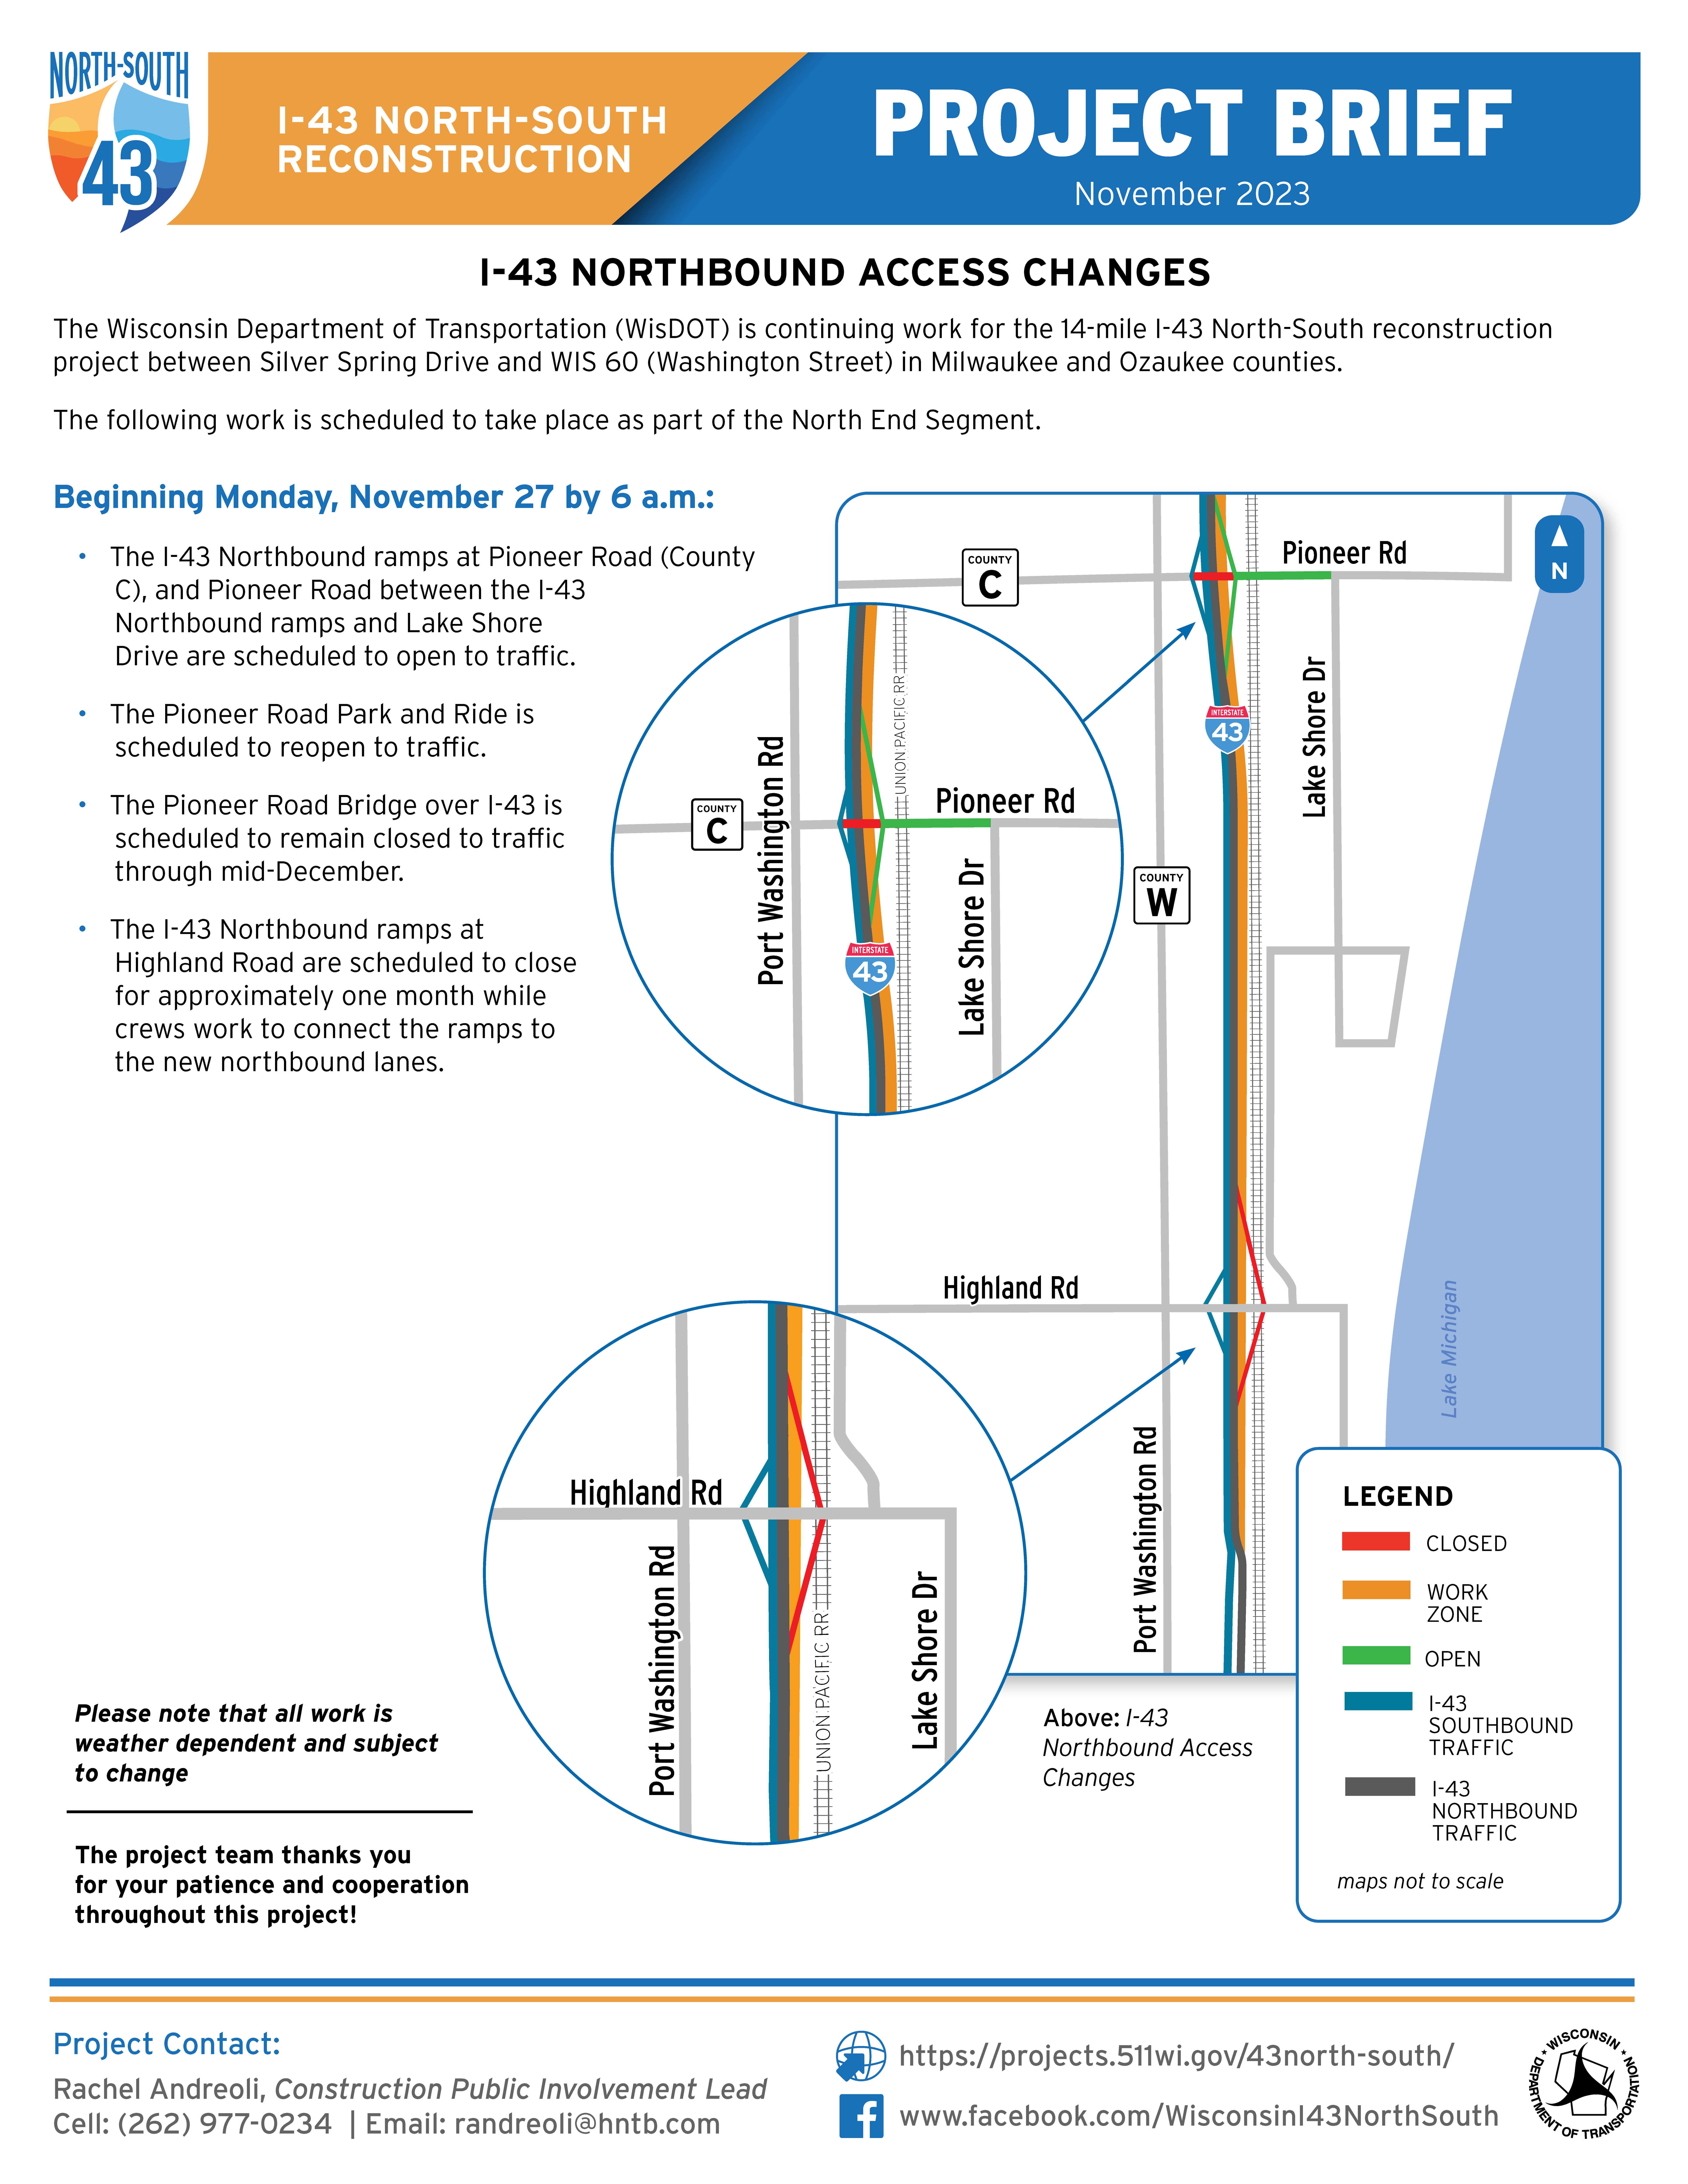 November 27, I-43 Northbound Access Changes